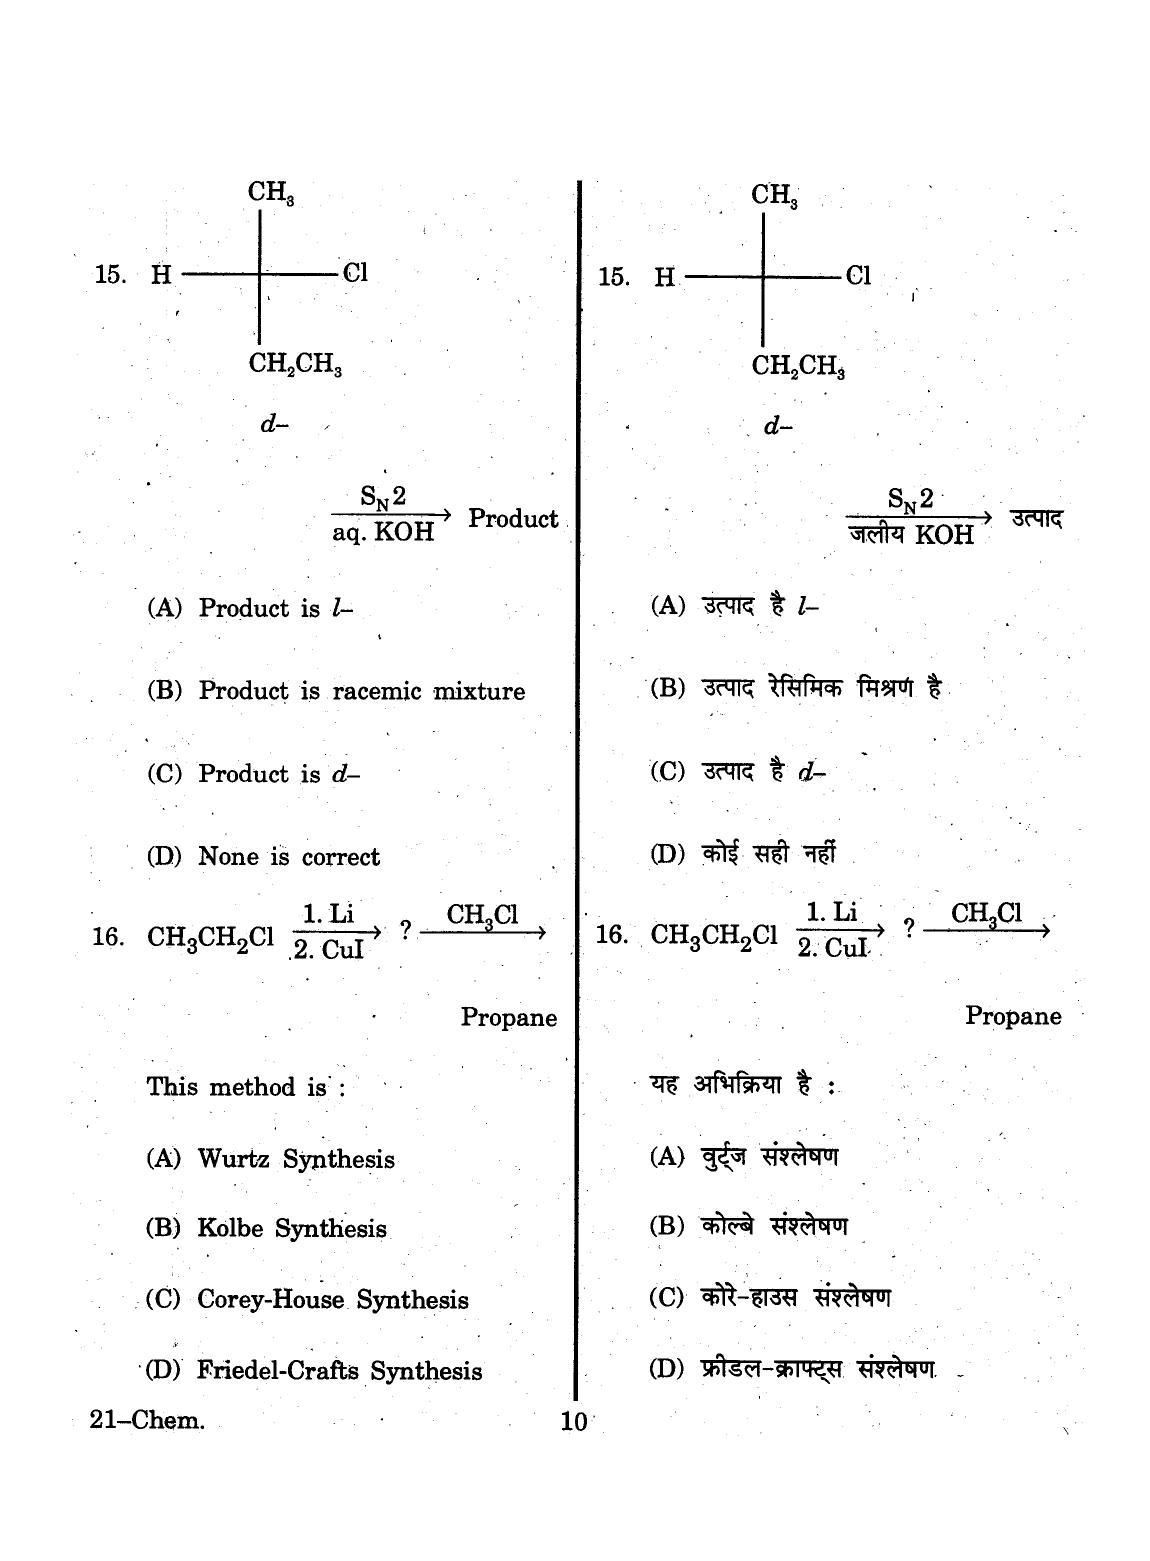 URATPG 2015 Chemisty Question Paper - Page 10